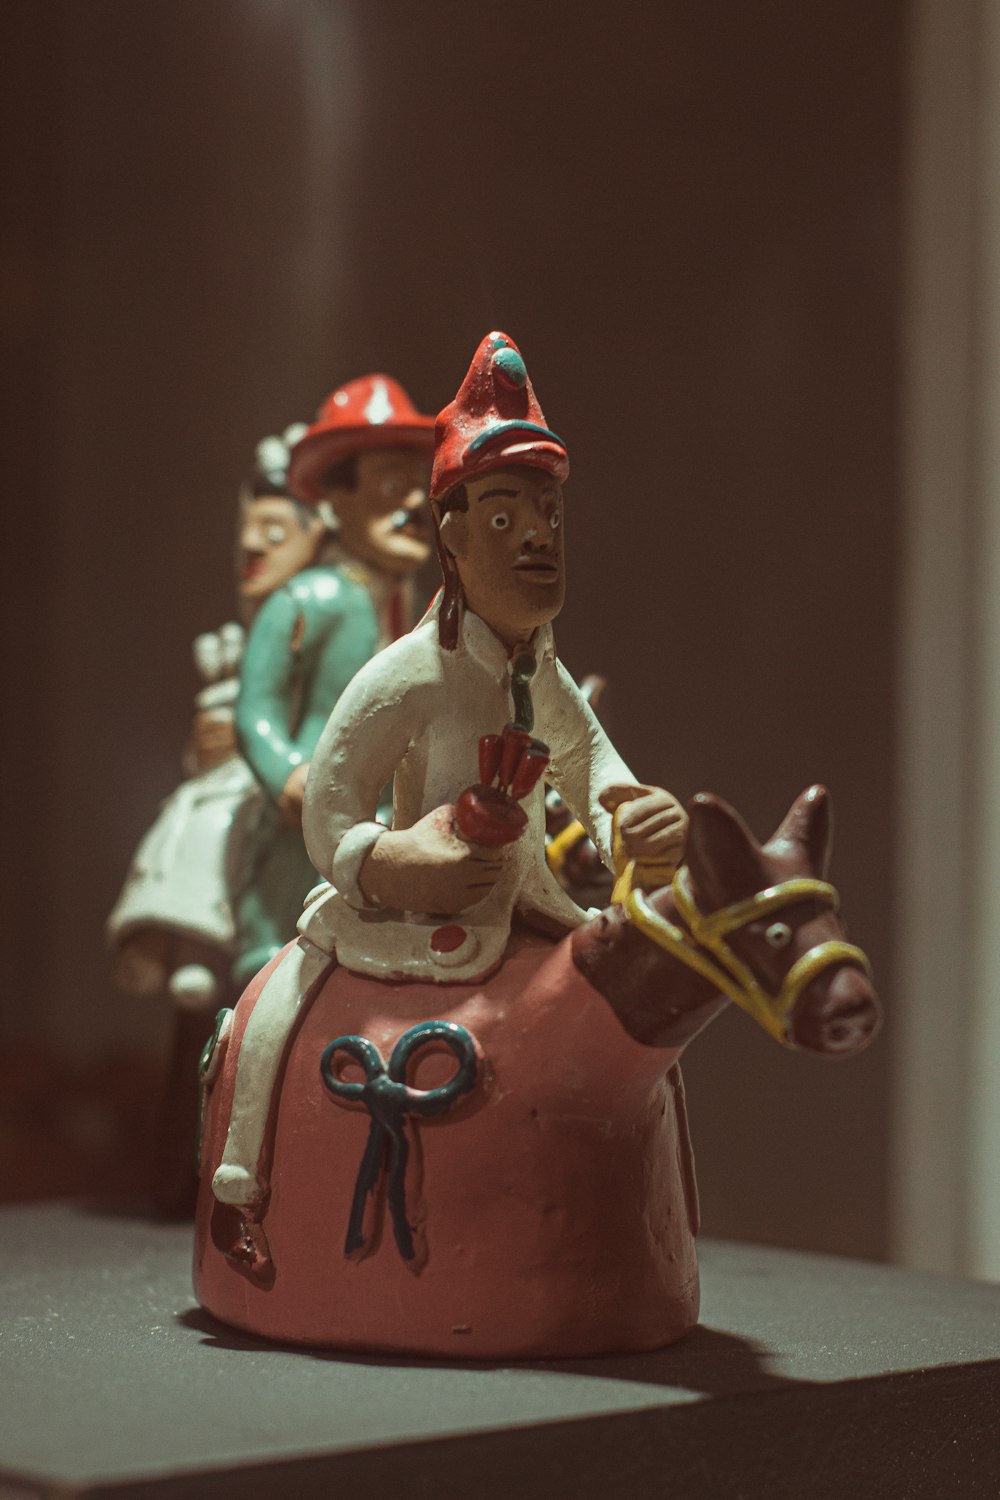 a figurine of a man riding a horse